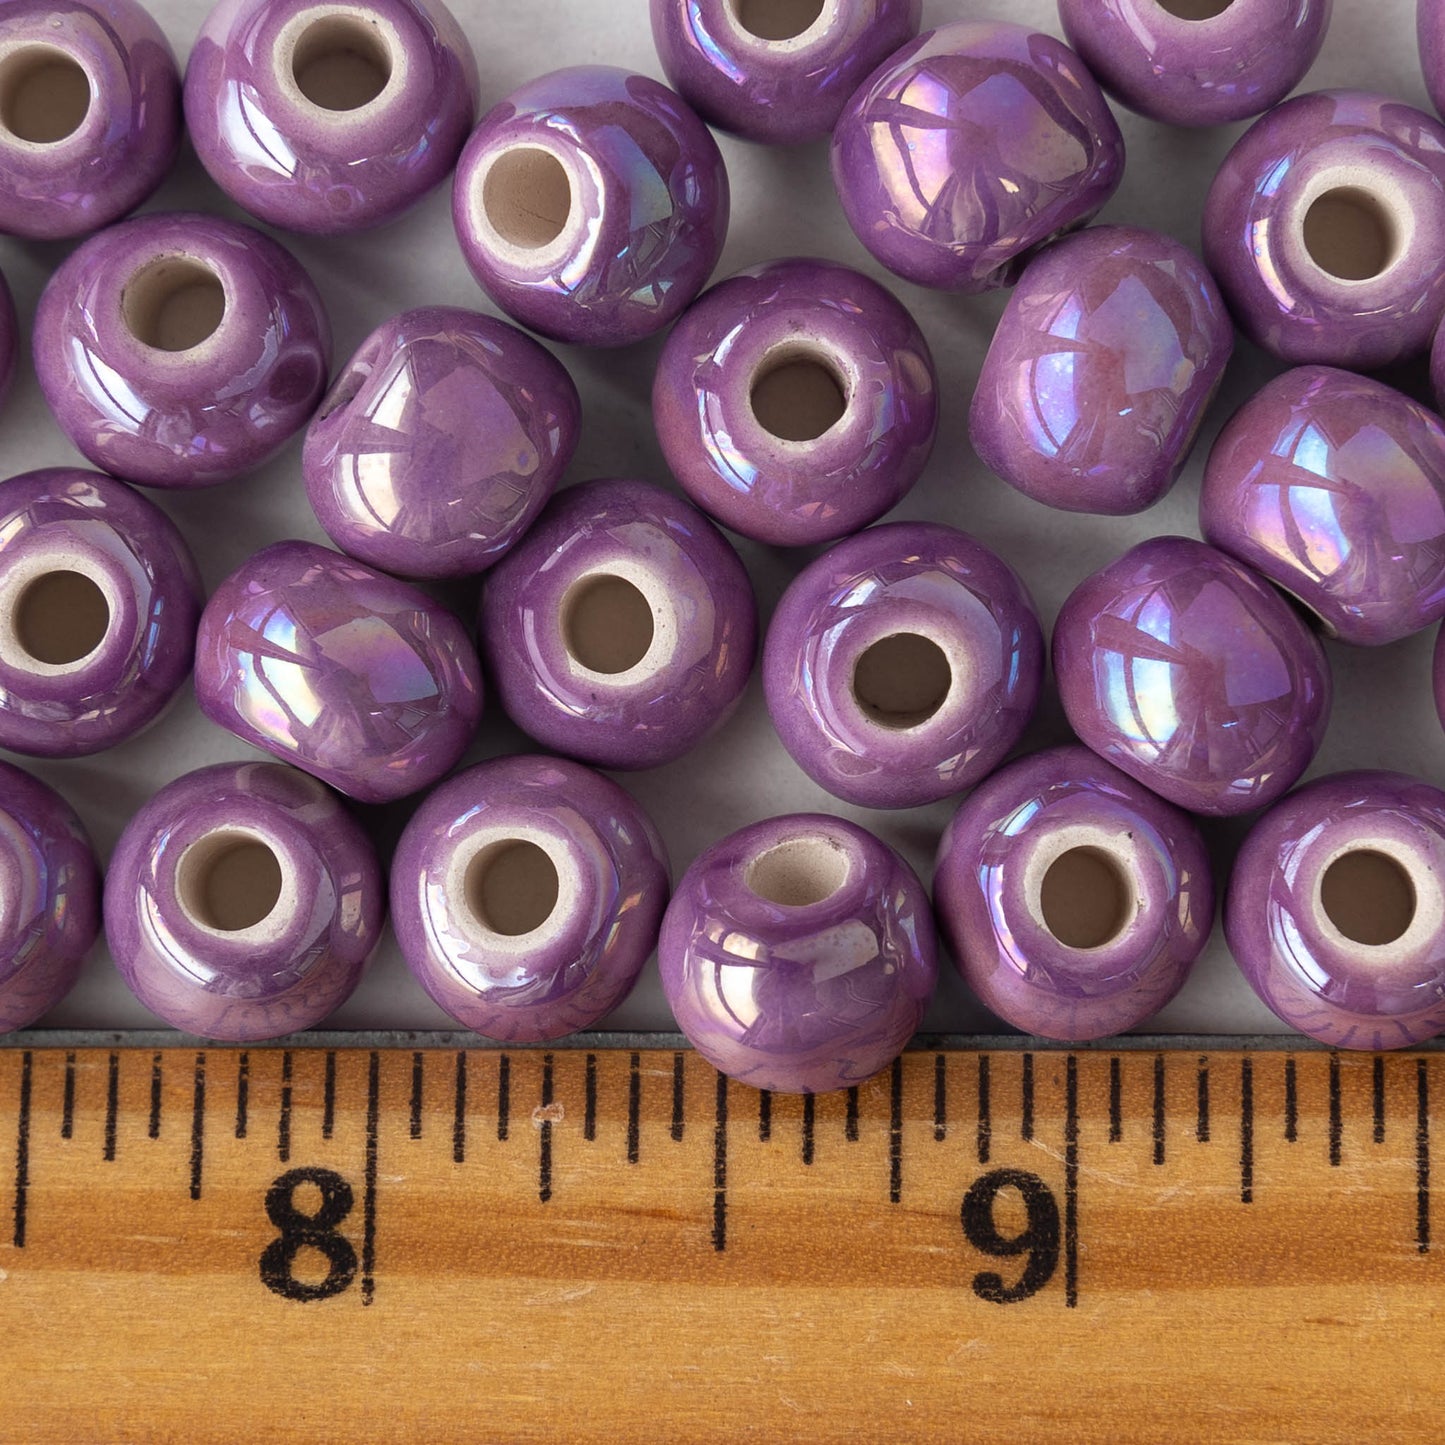 10mm Glazed Ceramic Round Beads - Iridescent Purple Passion - 6 or 18